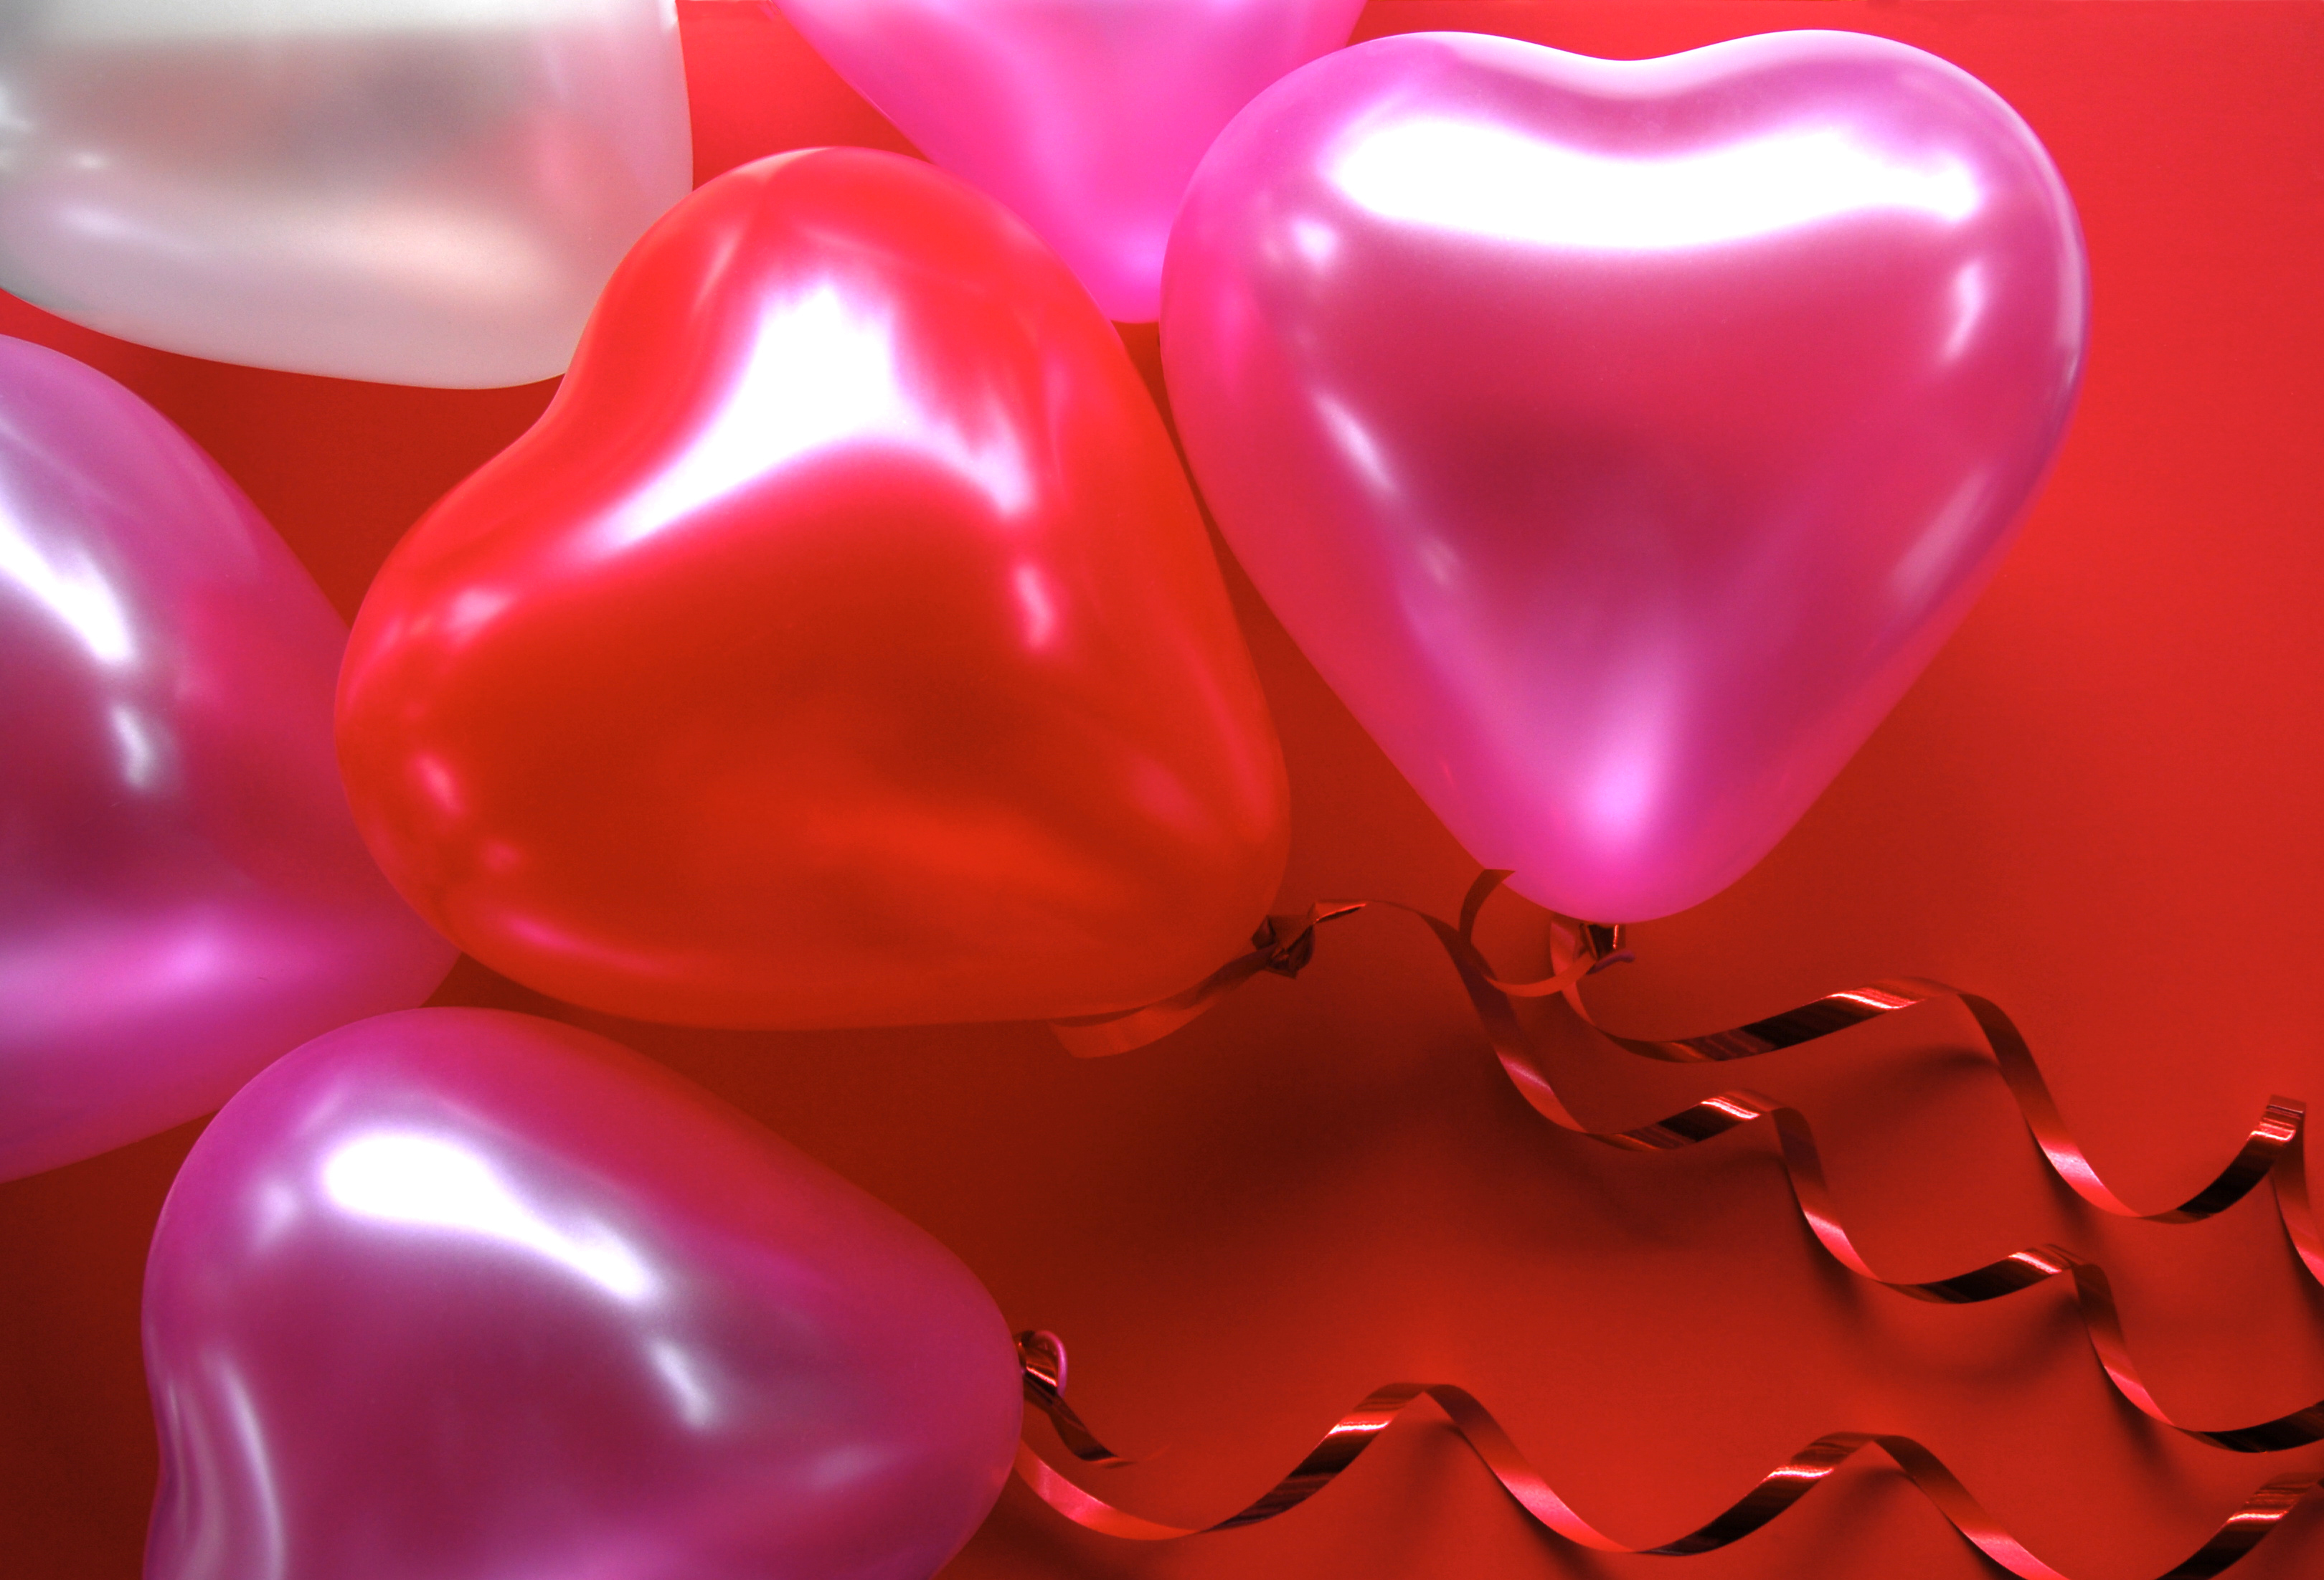 Last Minute Valentine’s Day Ideas | Goodie Tins3240 x 2203